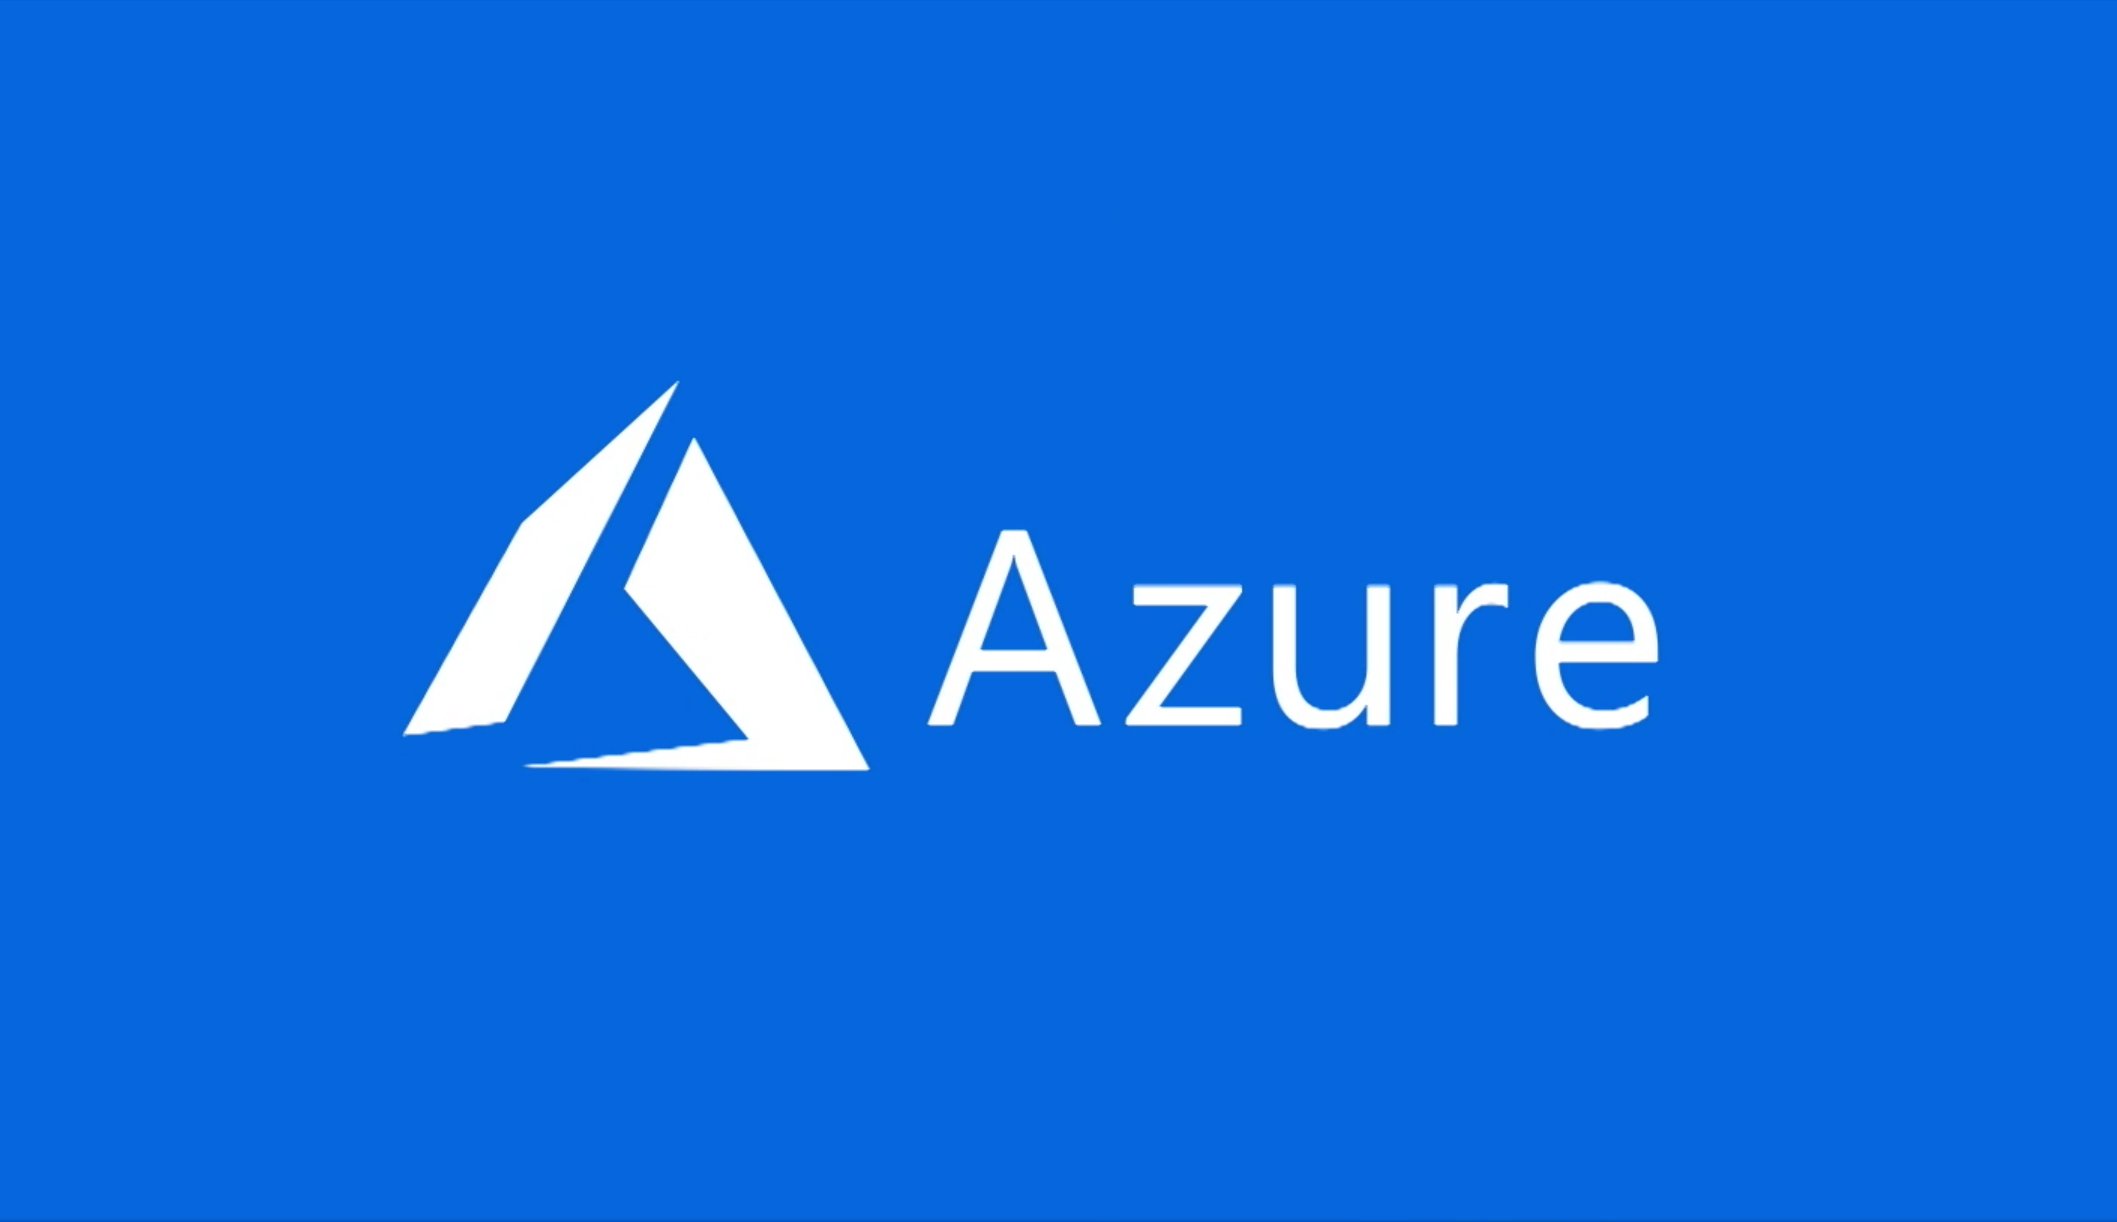 Azure microsoft